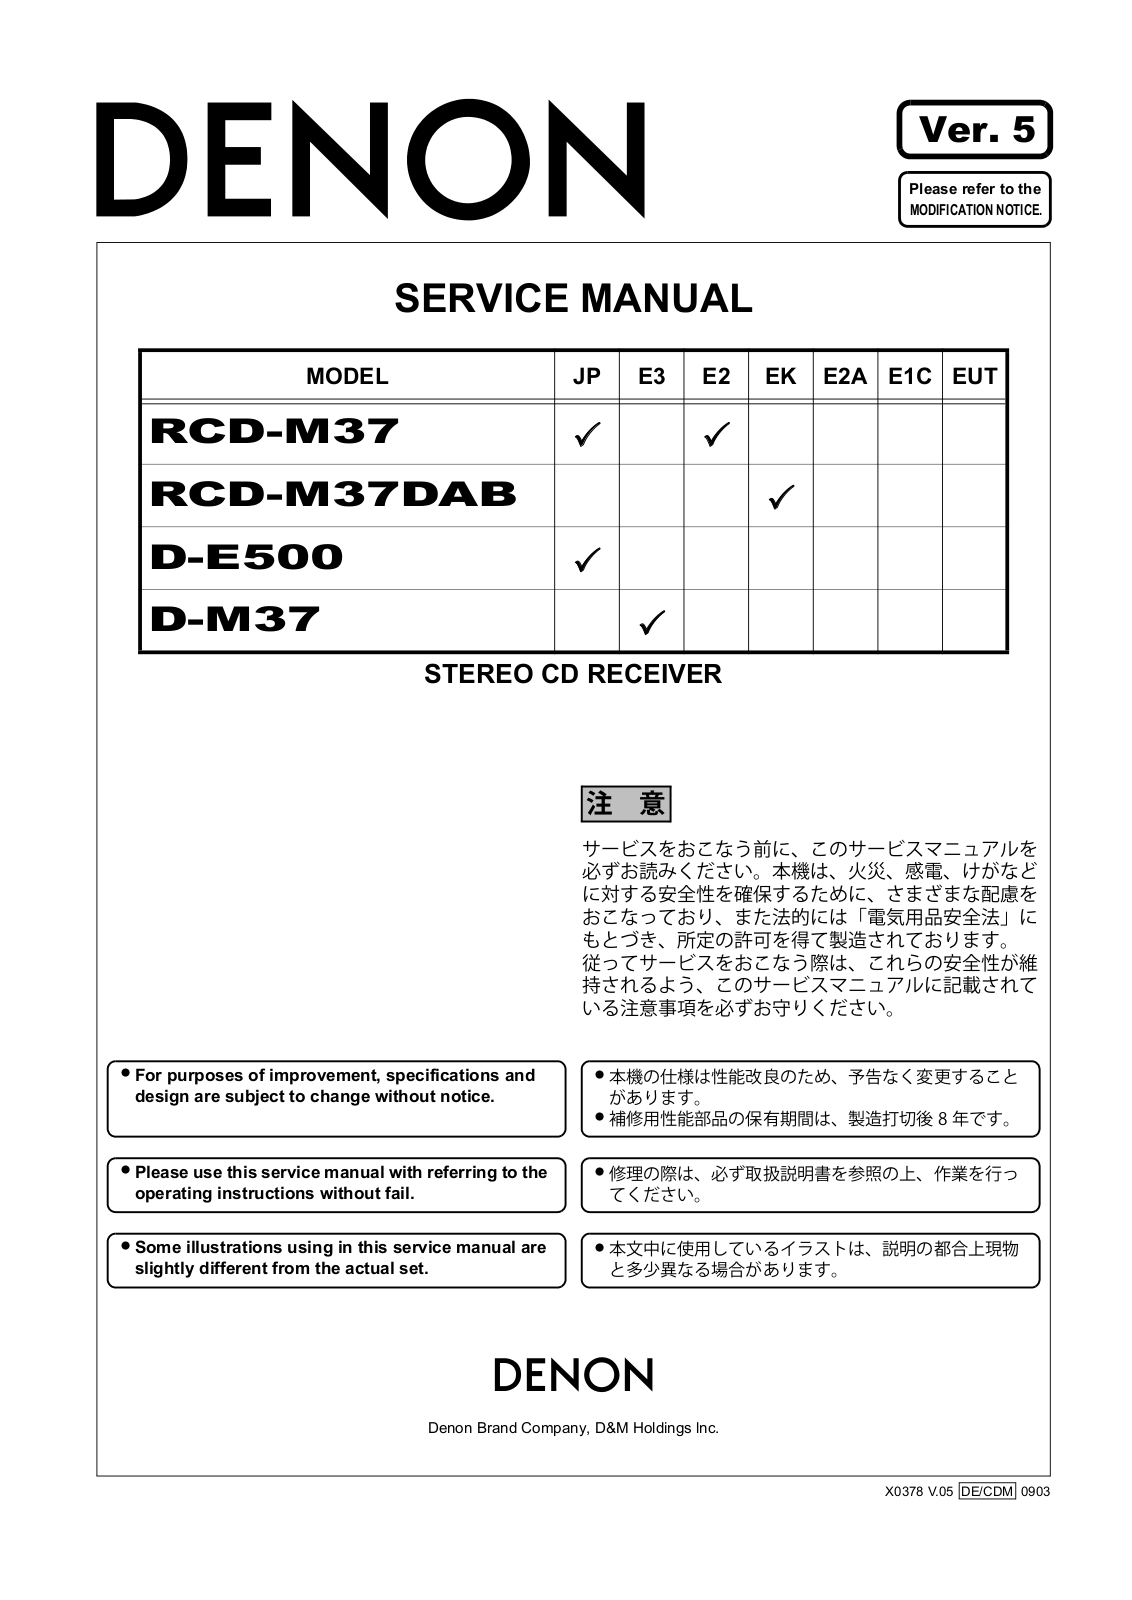 Denon RCD-M37, D-E500, D-M37 Service Manual